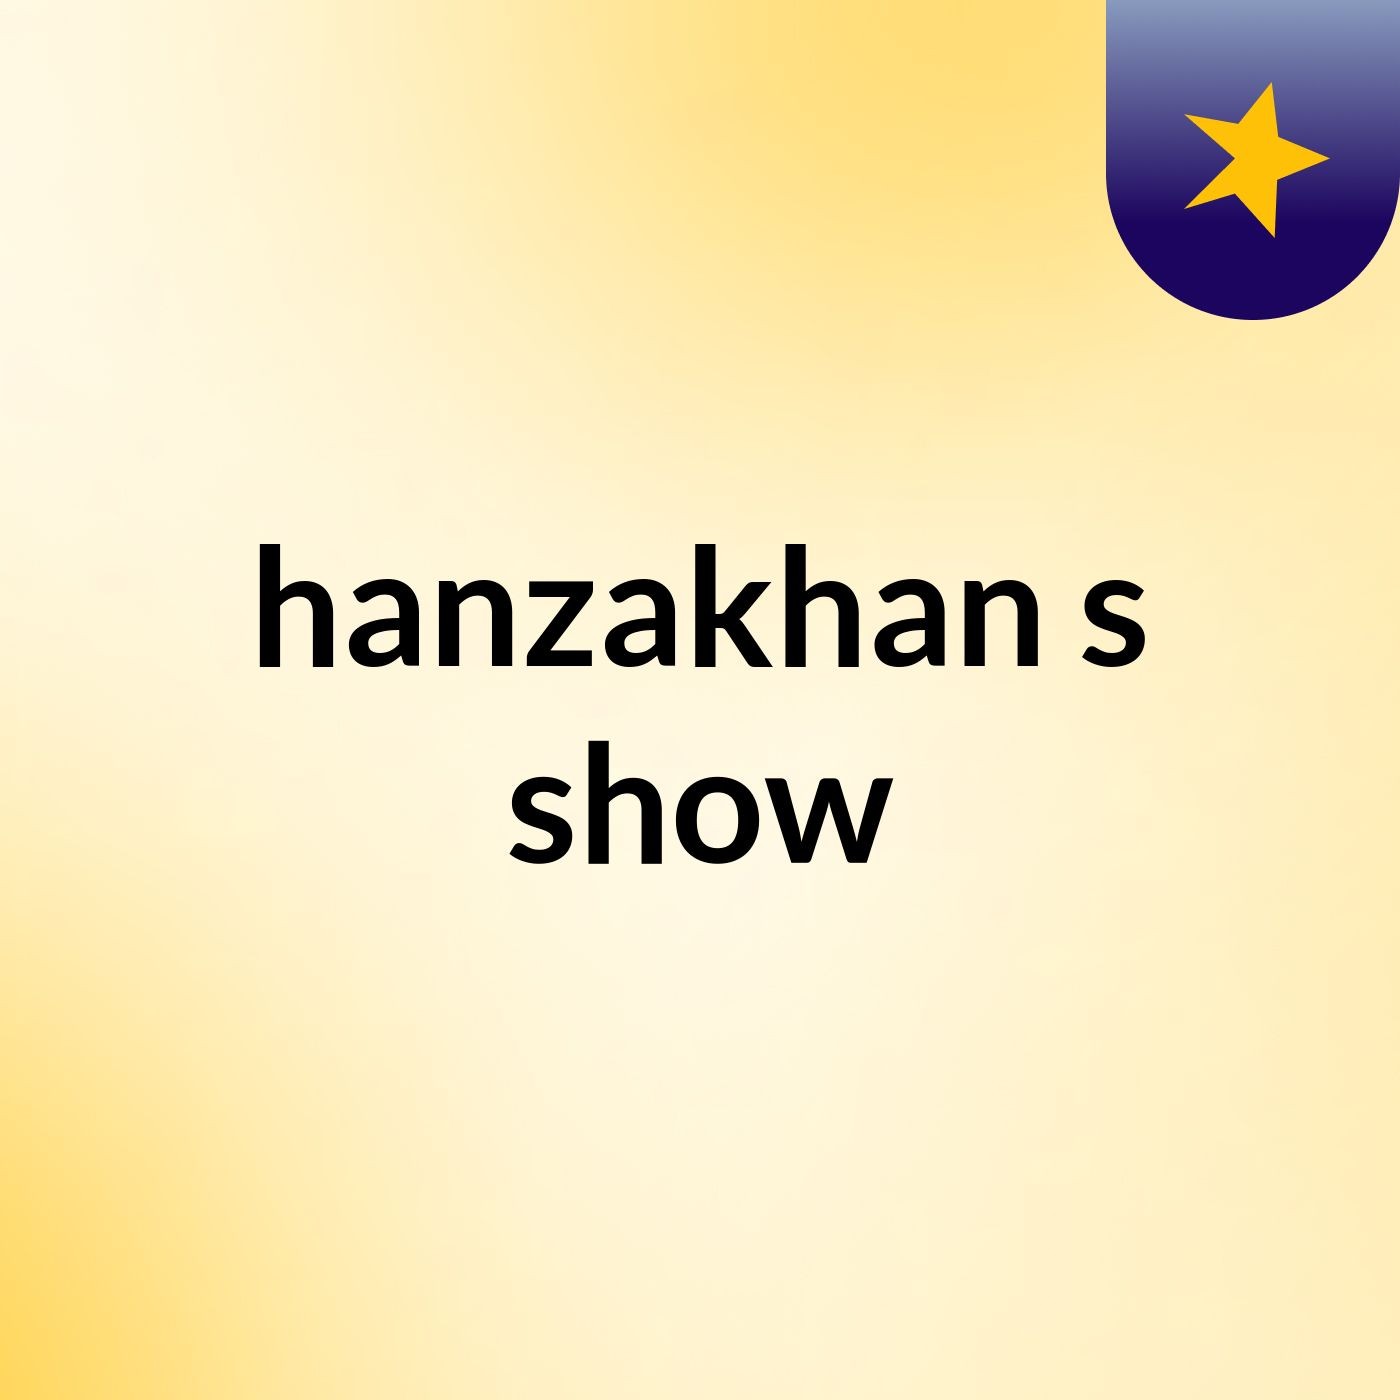 hanzakhan's show